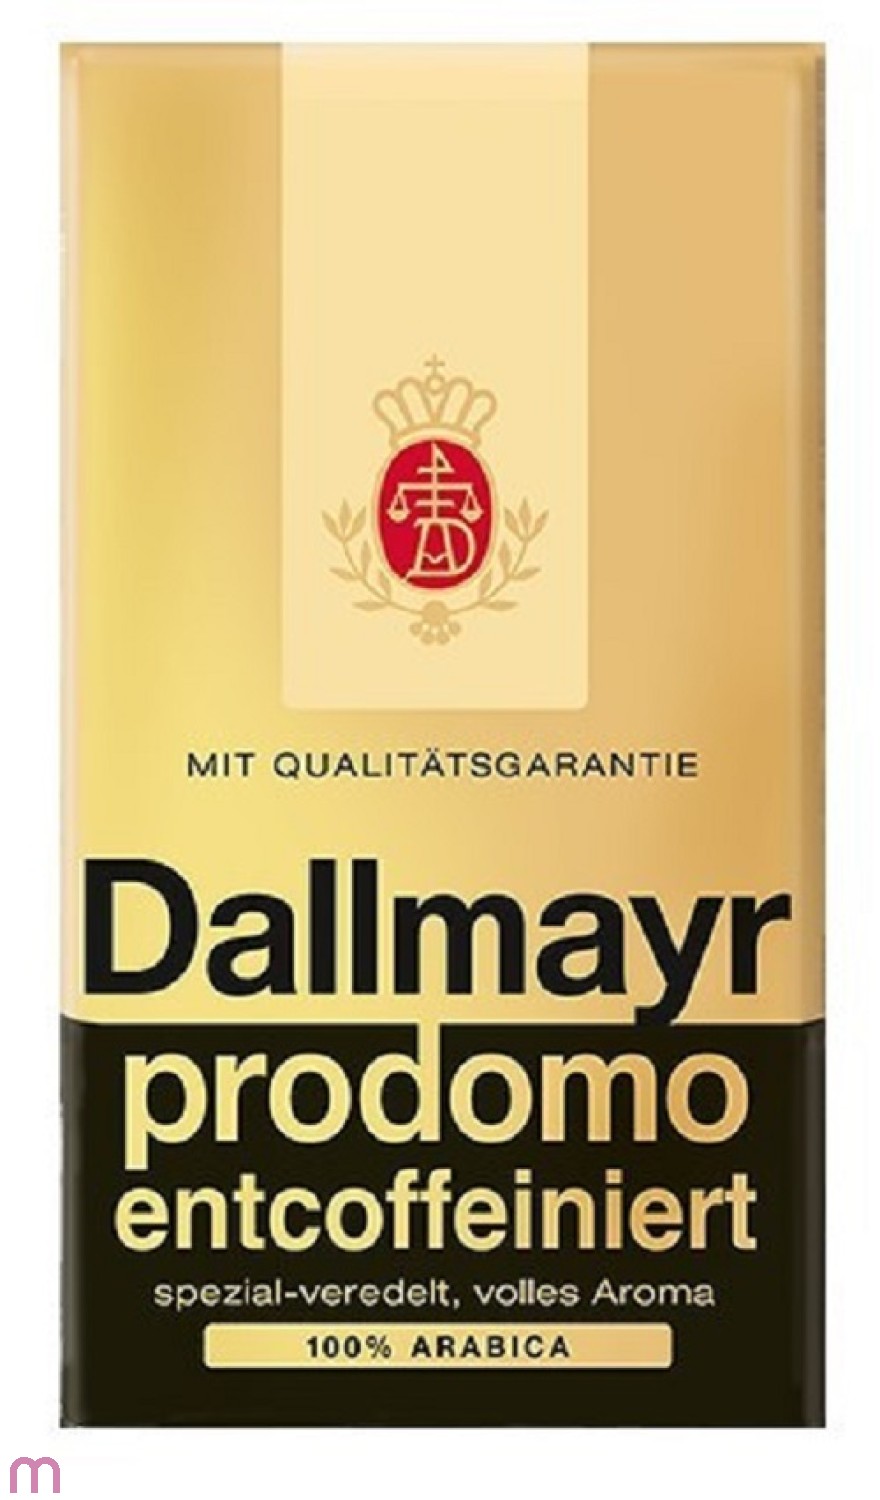 Dallmayr prodomo entcoffeiniert Gemahlen 250g